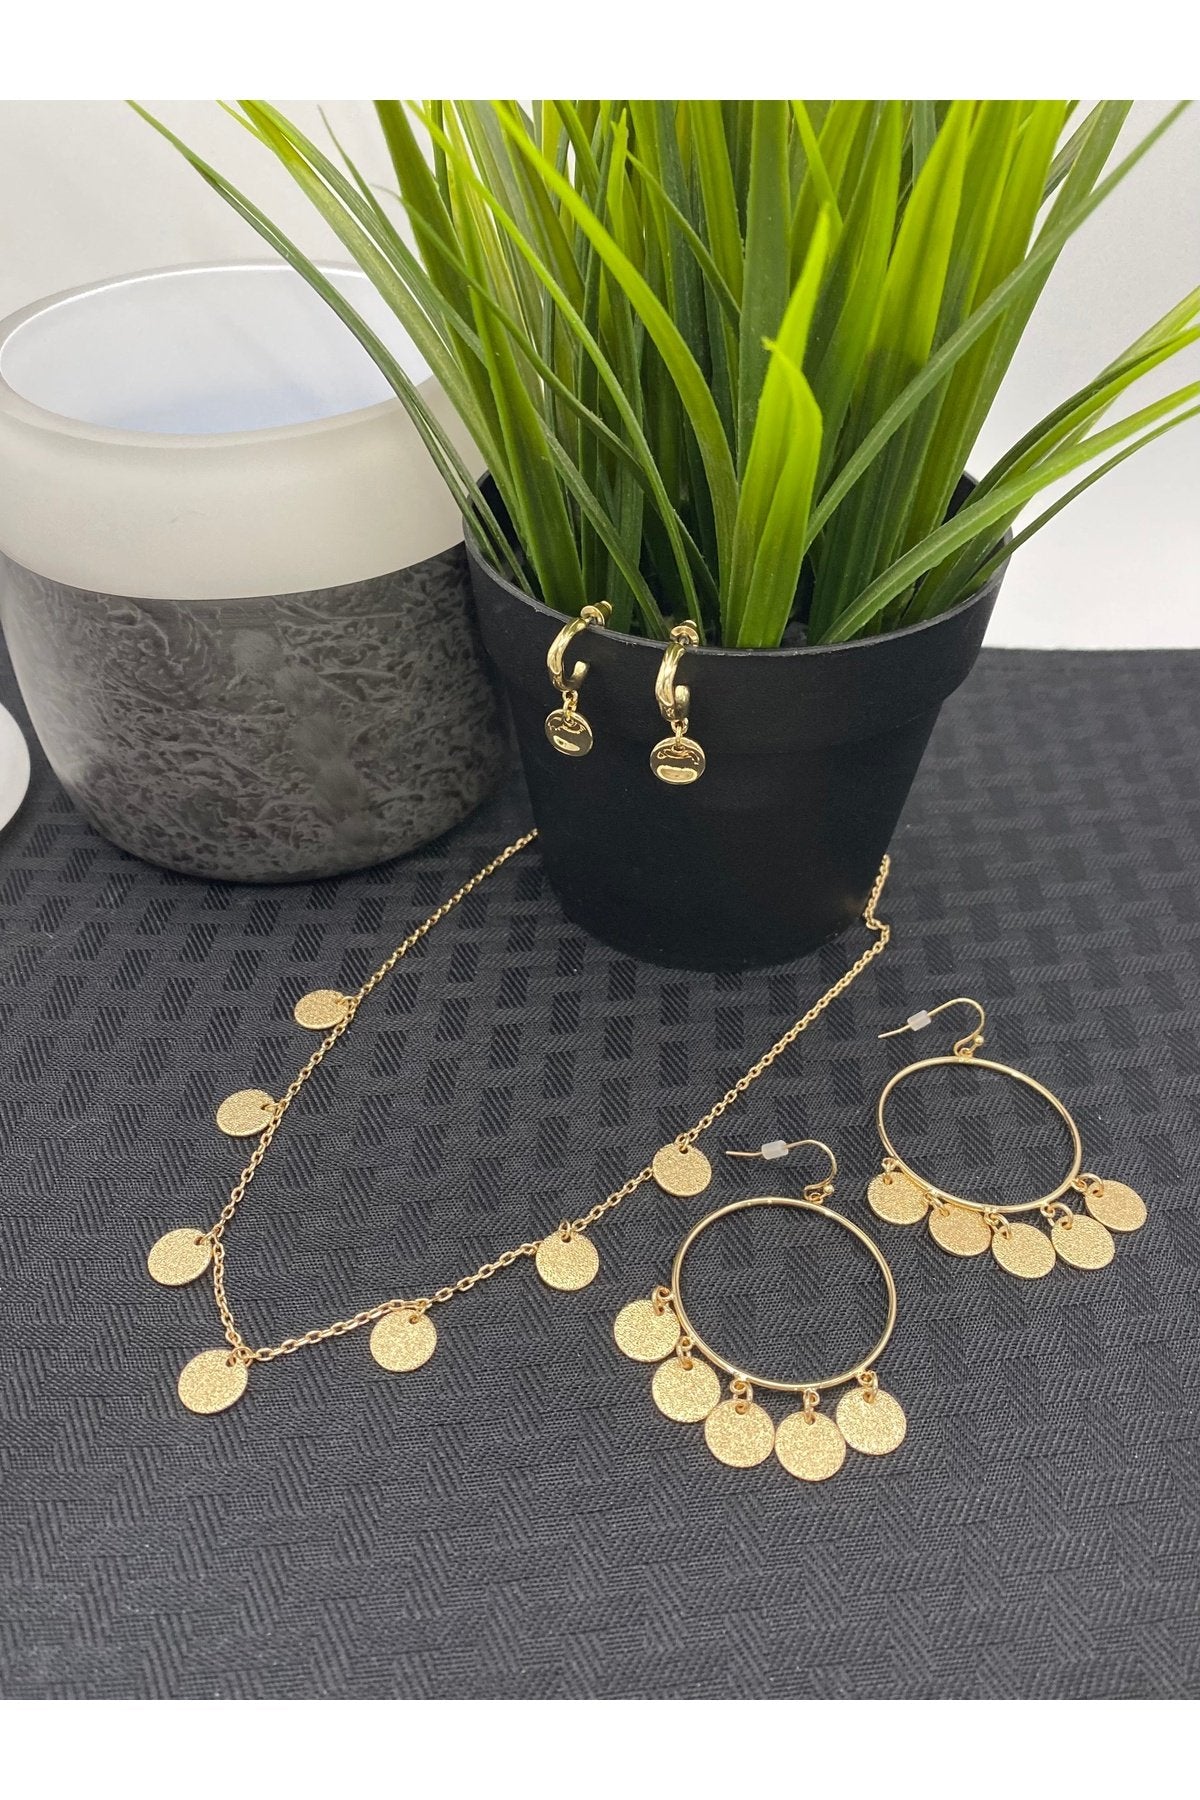 Small Hoop w/ Circle Dangle Earrings - Gold